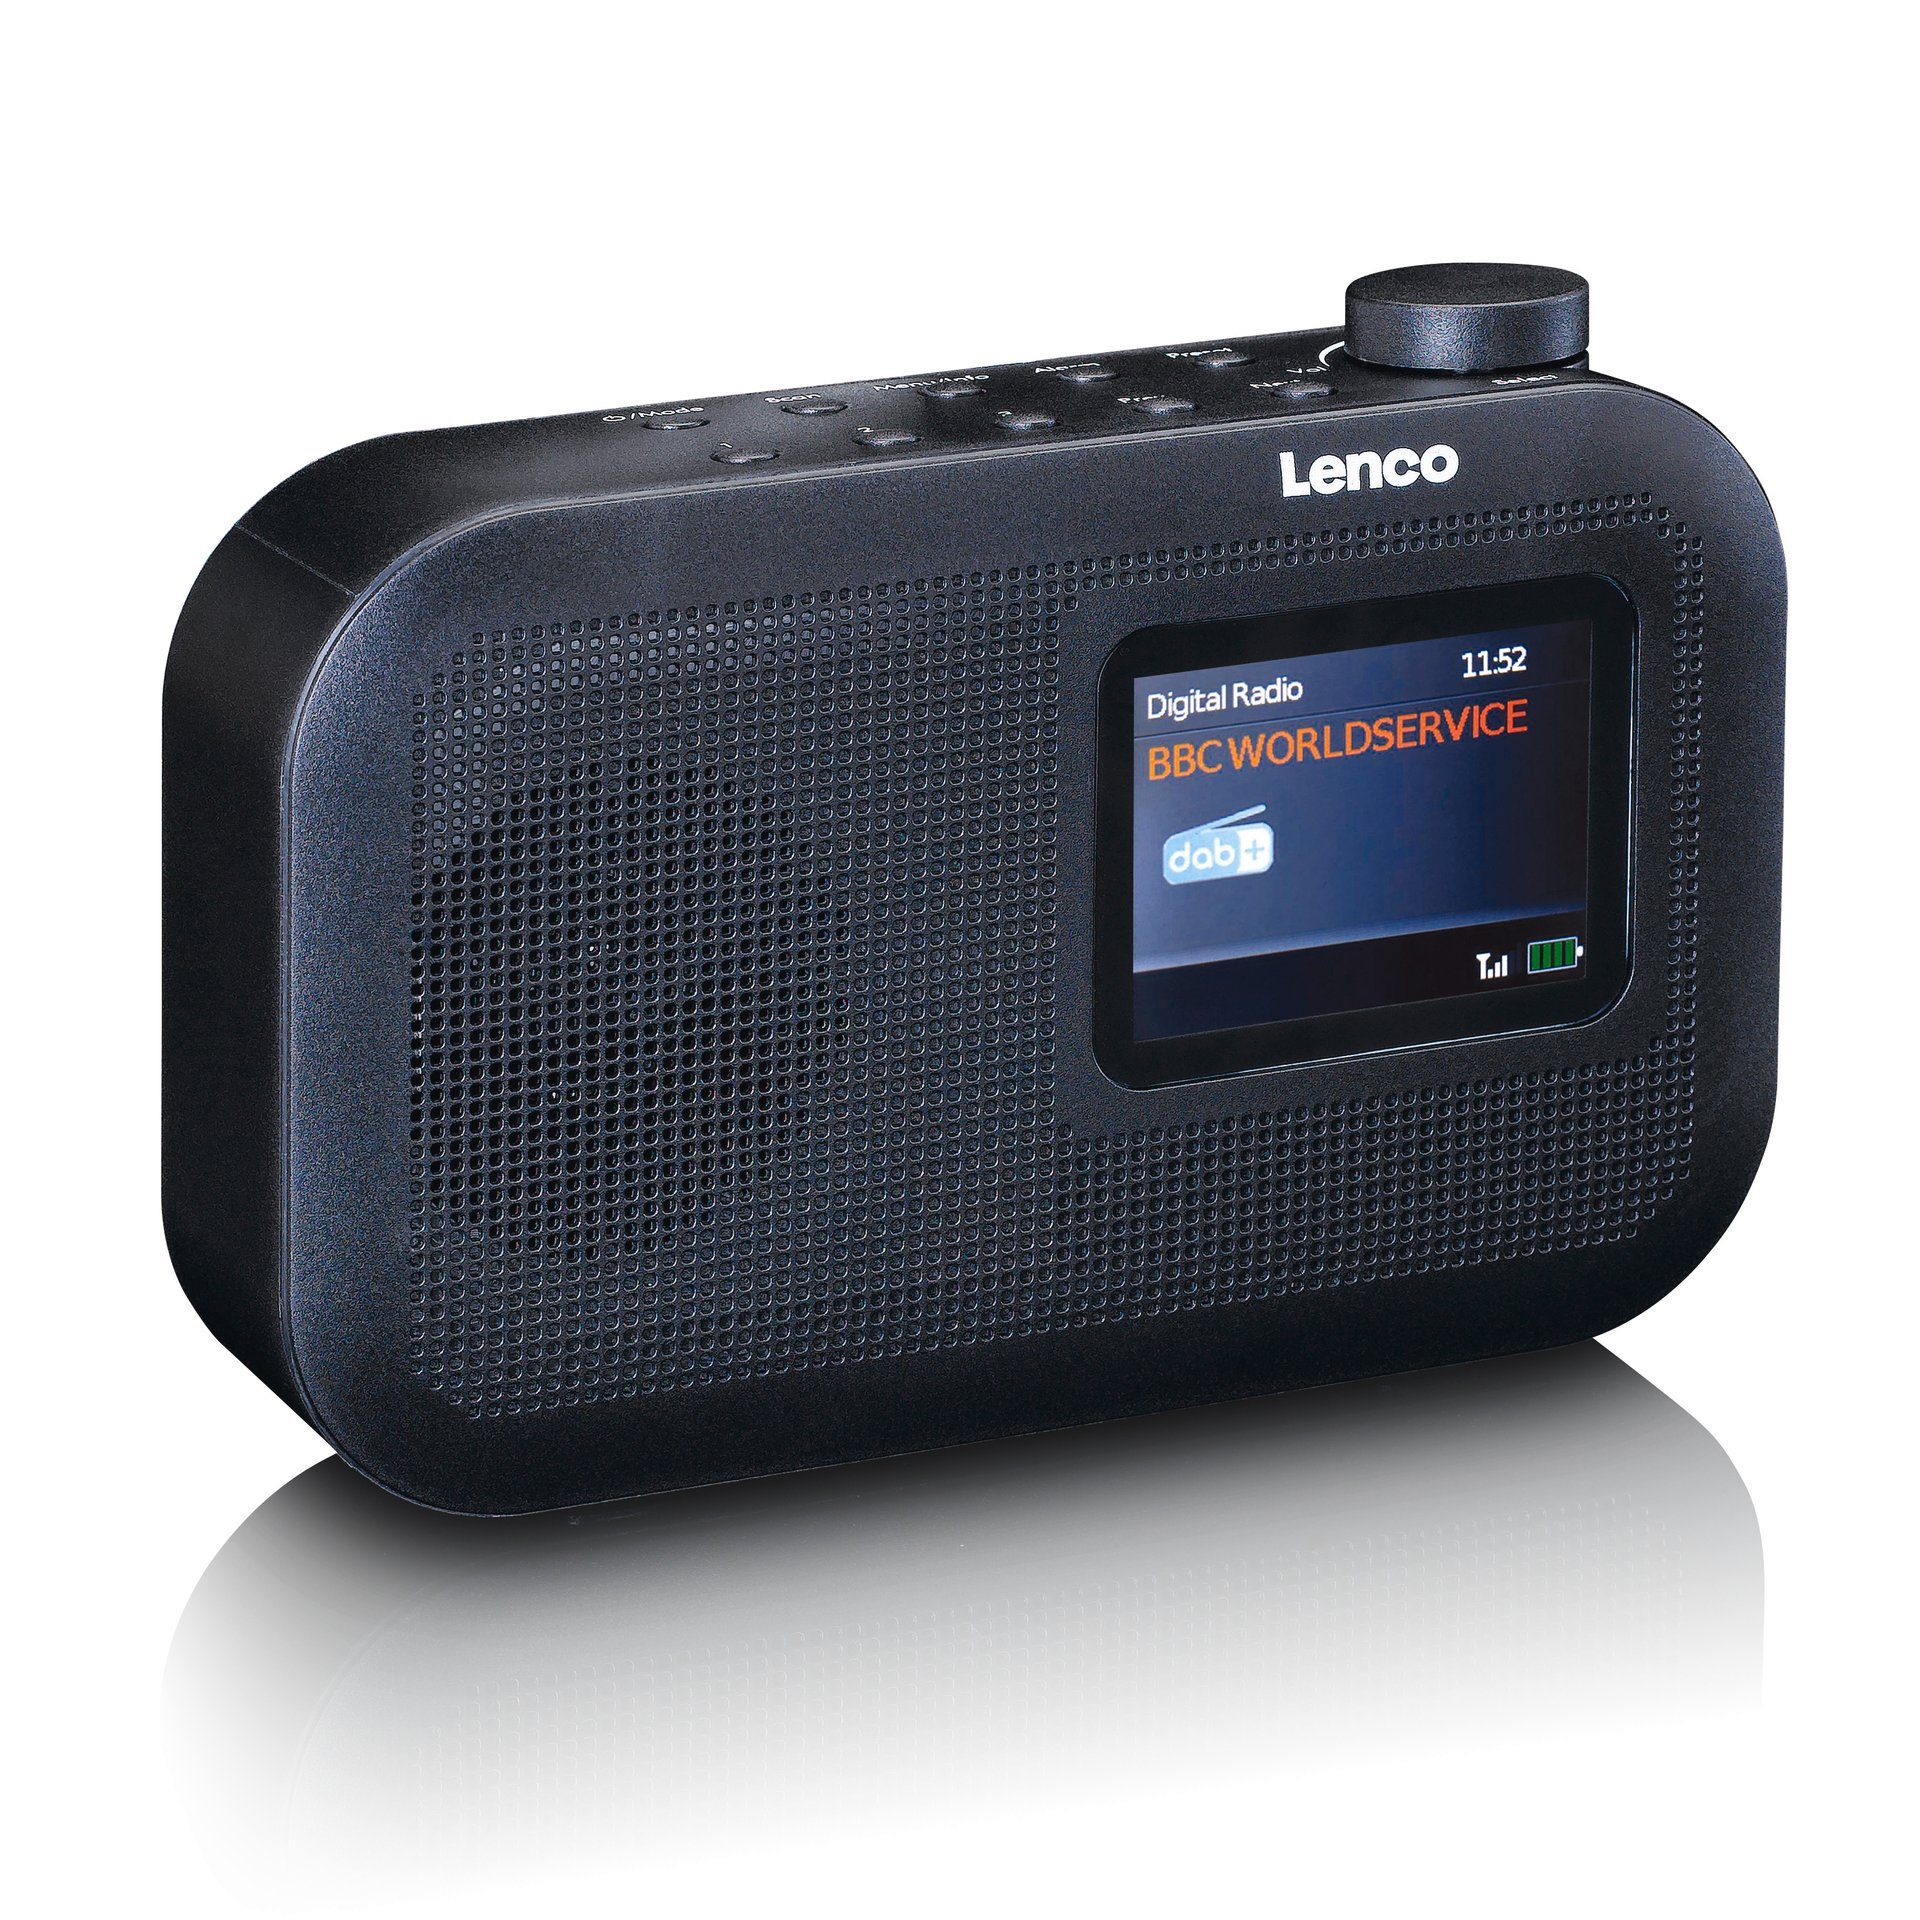 wandelen snap doden Lenco Digitale radio (dab+) PDR-026BK - DAB+ draagbare radio makkelijk  besteld | OTTO